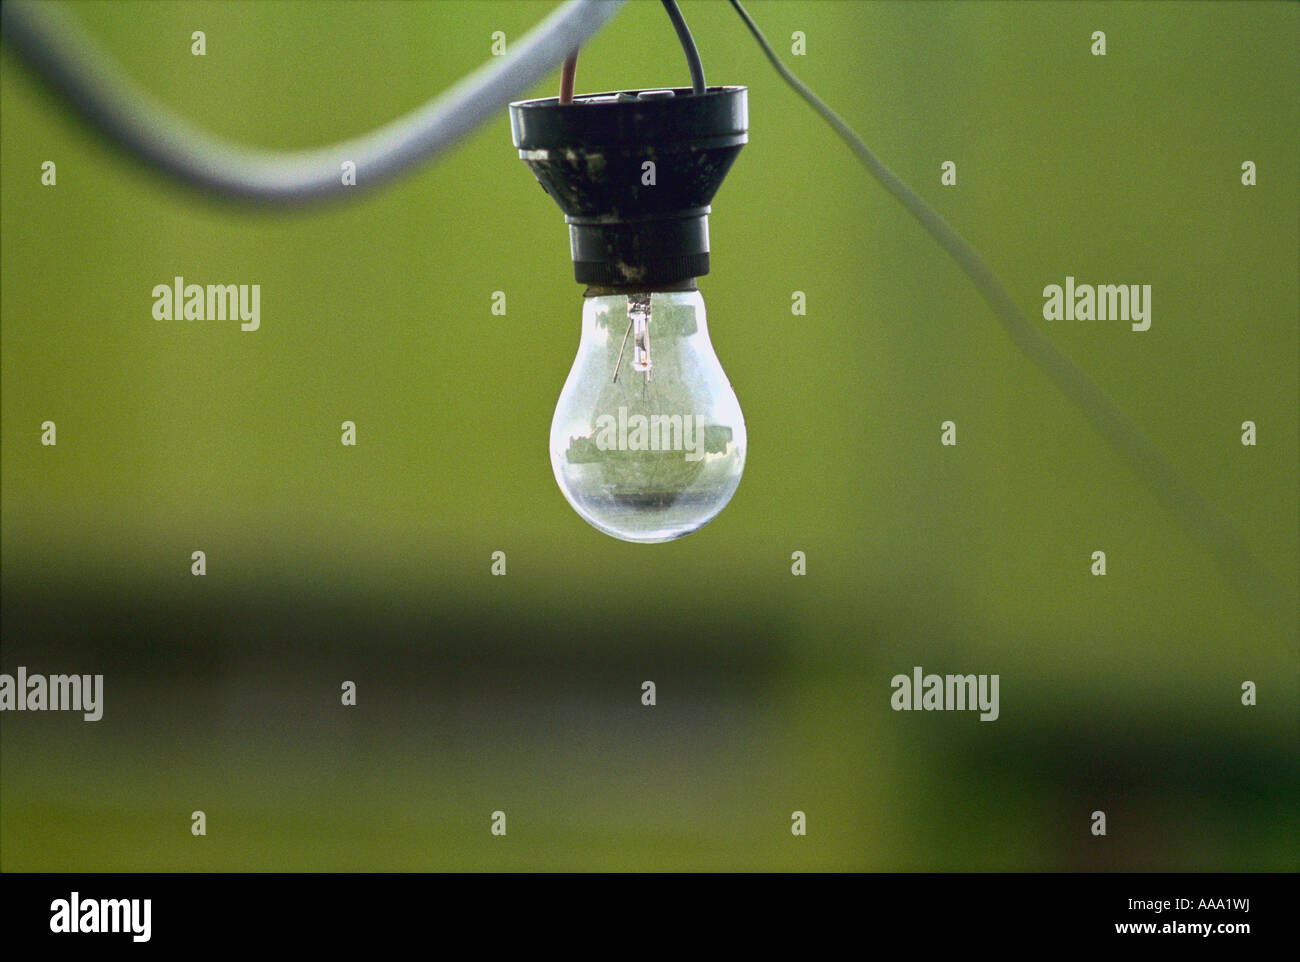 A hanging incandescent lightbulb. Stock Photo